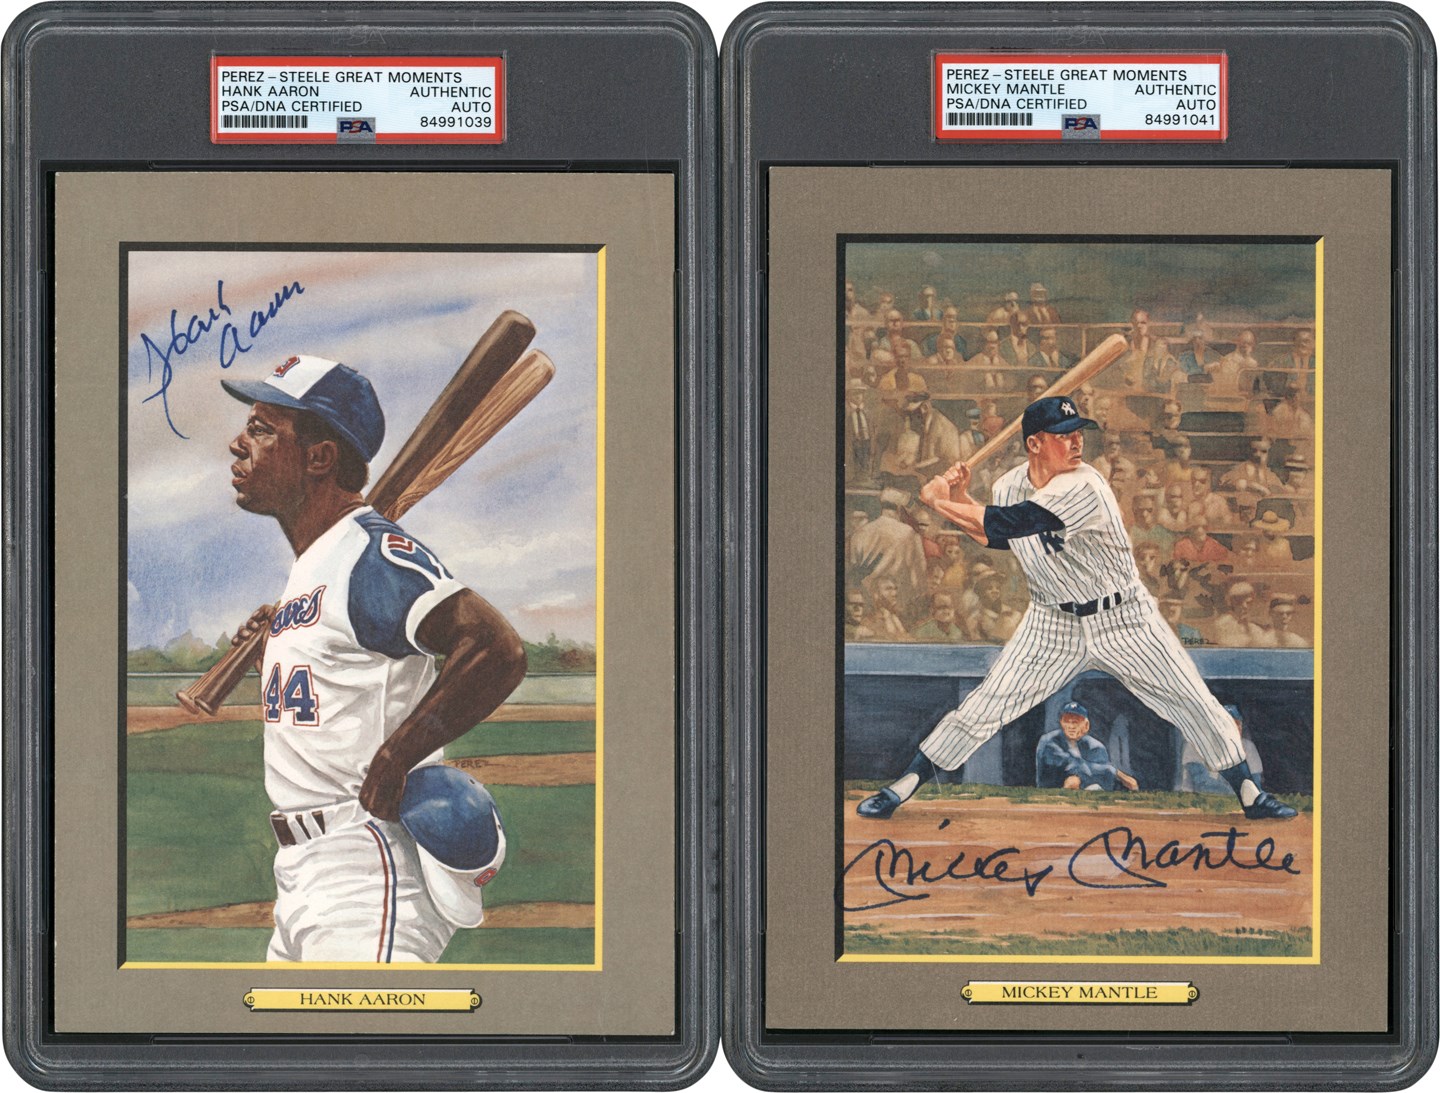 Baseball Autographs - Perez Steele Greatest Moments Complete Signed Postcard Set #3300 (PSA)